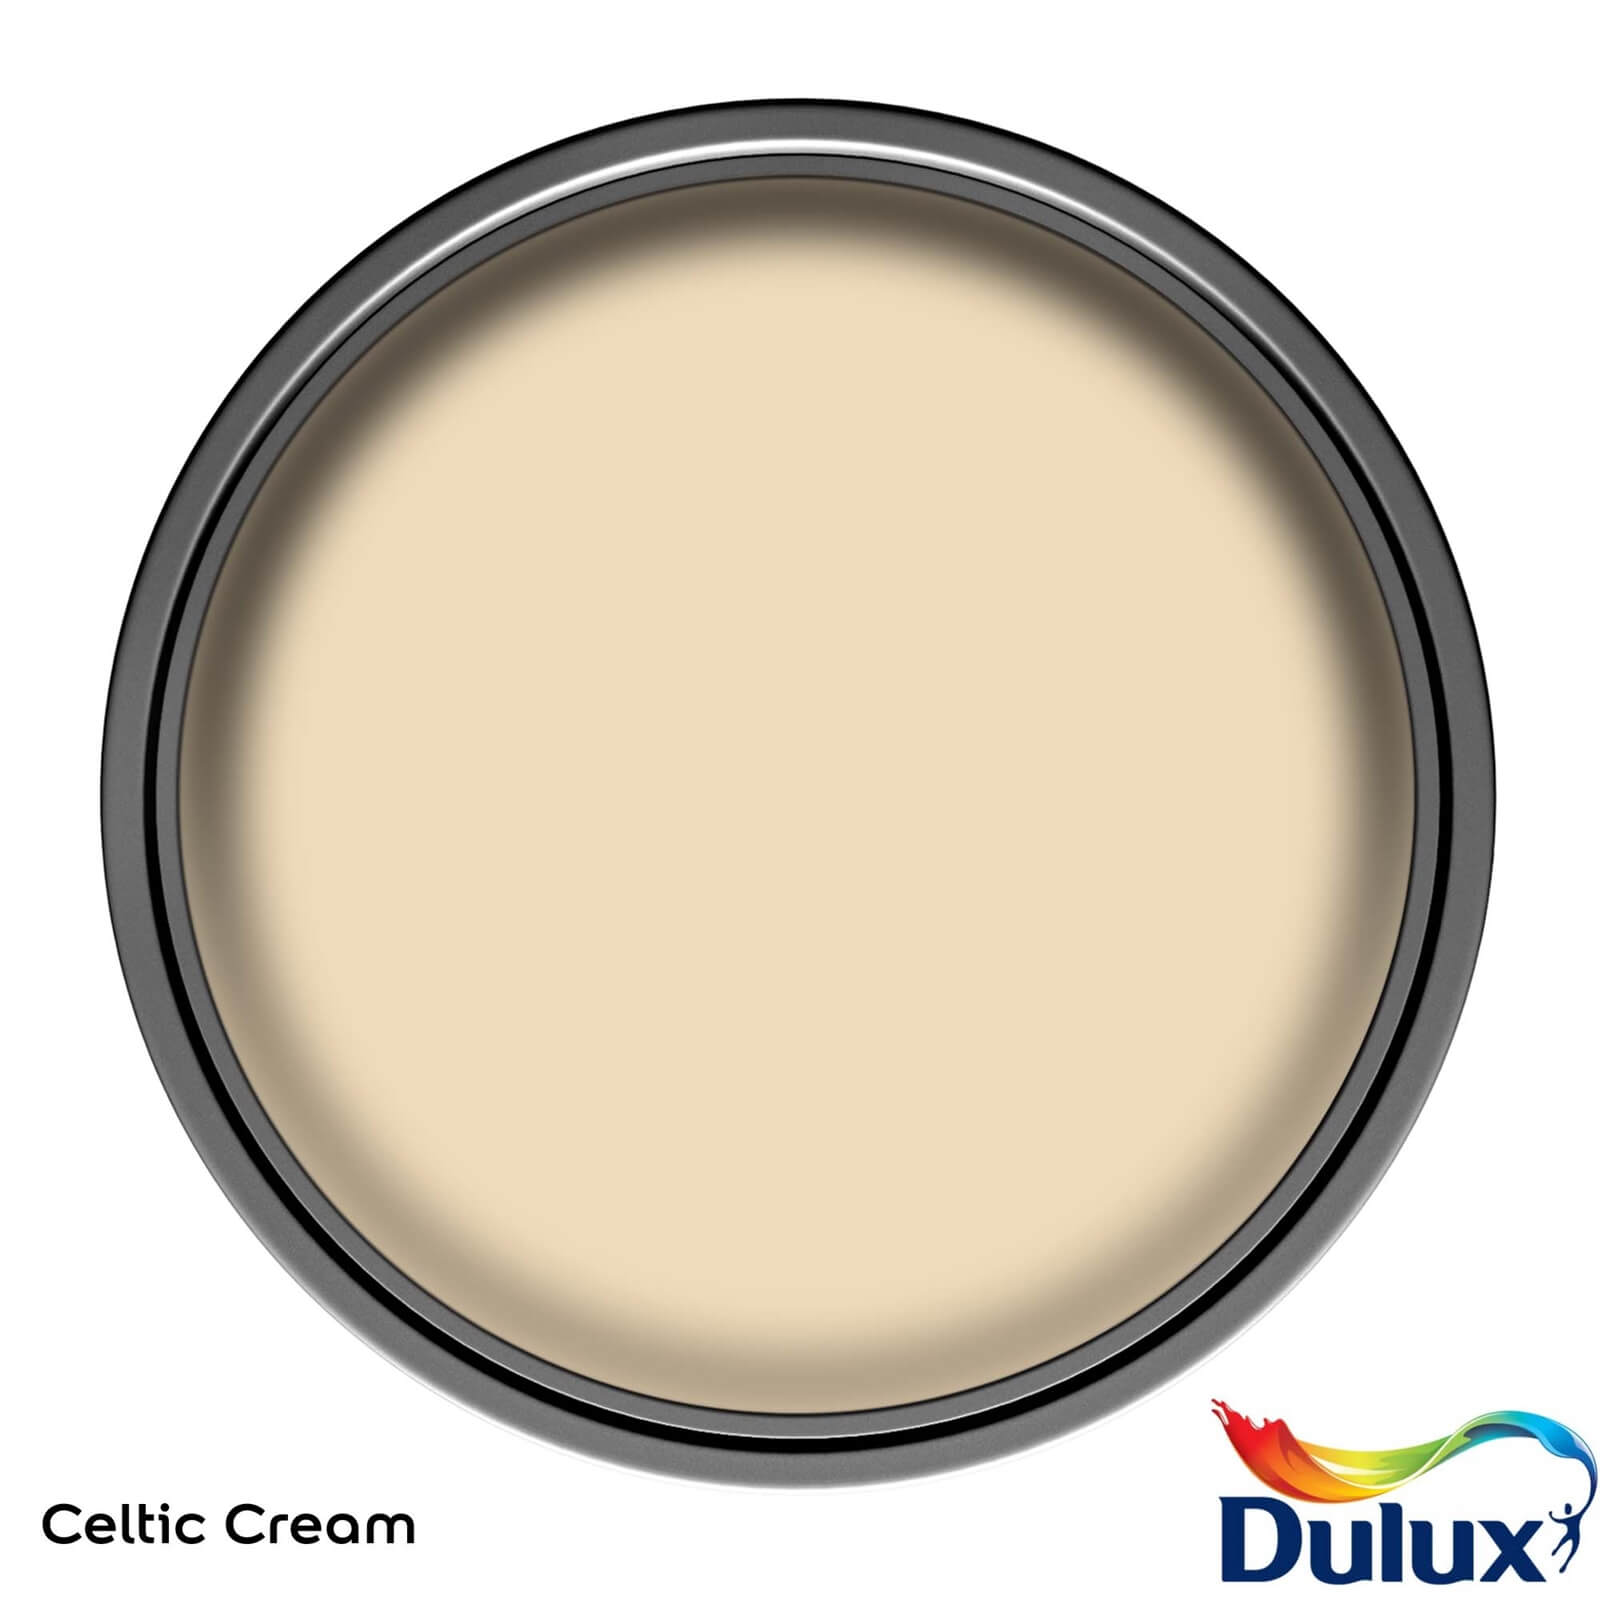 Dulux Weathershield Exterior Quick Dry Satin Paint Celtic Cream - 750ml